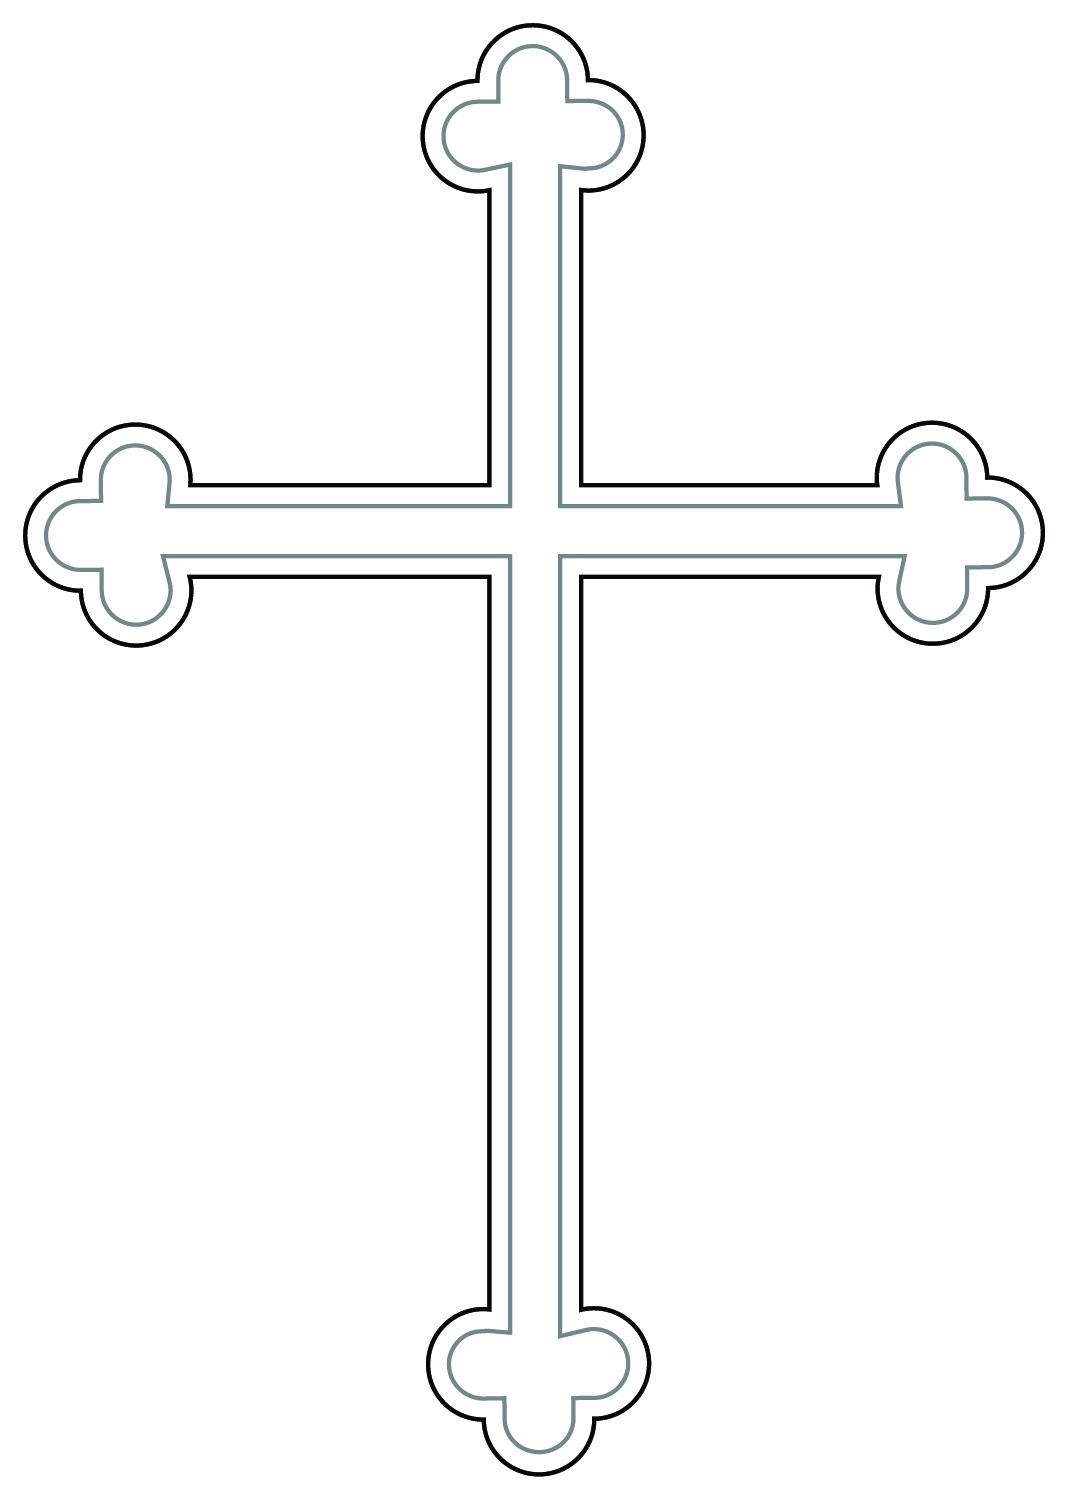 Free Catholic Cross Hd Image Clipart